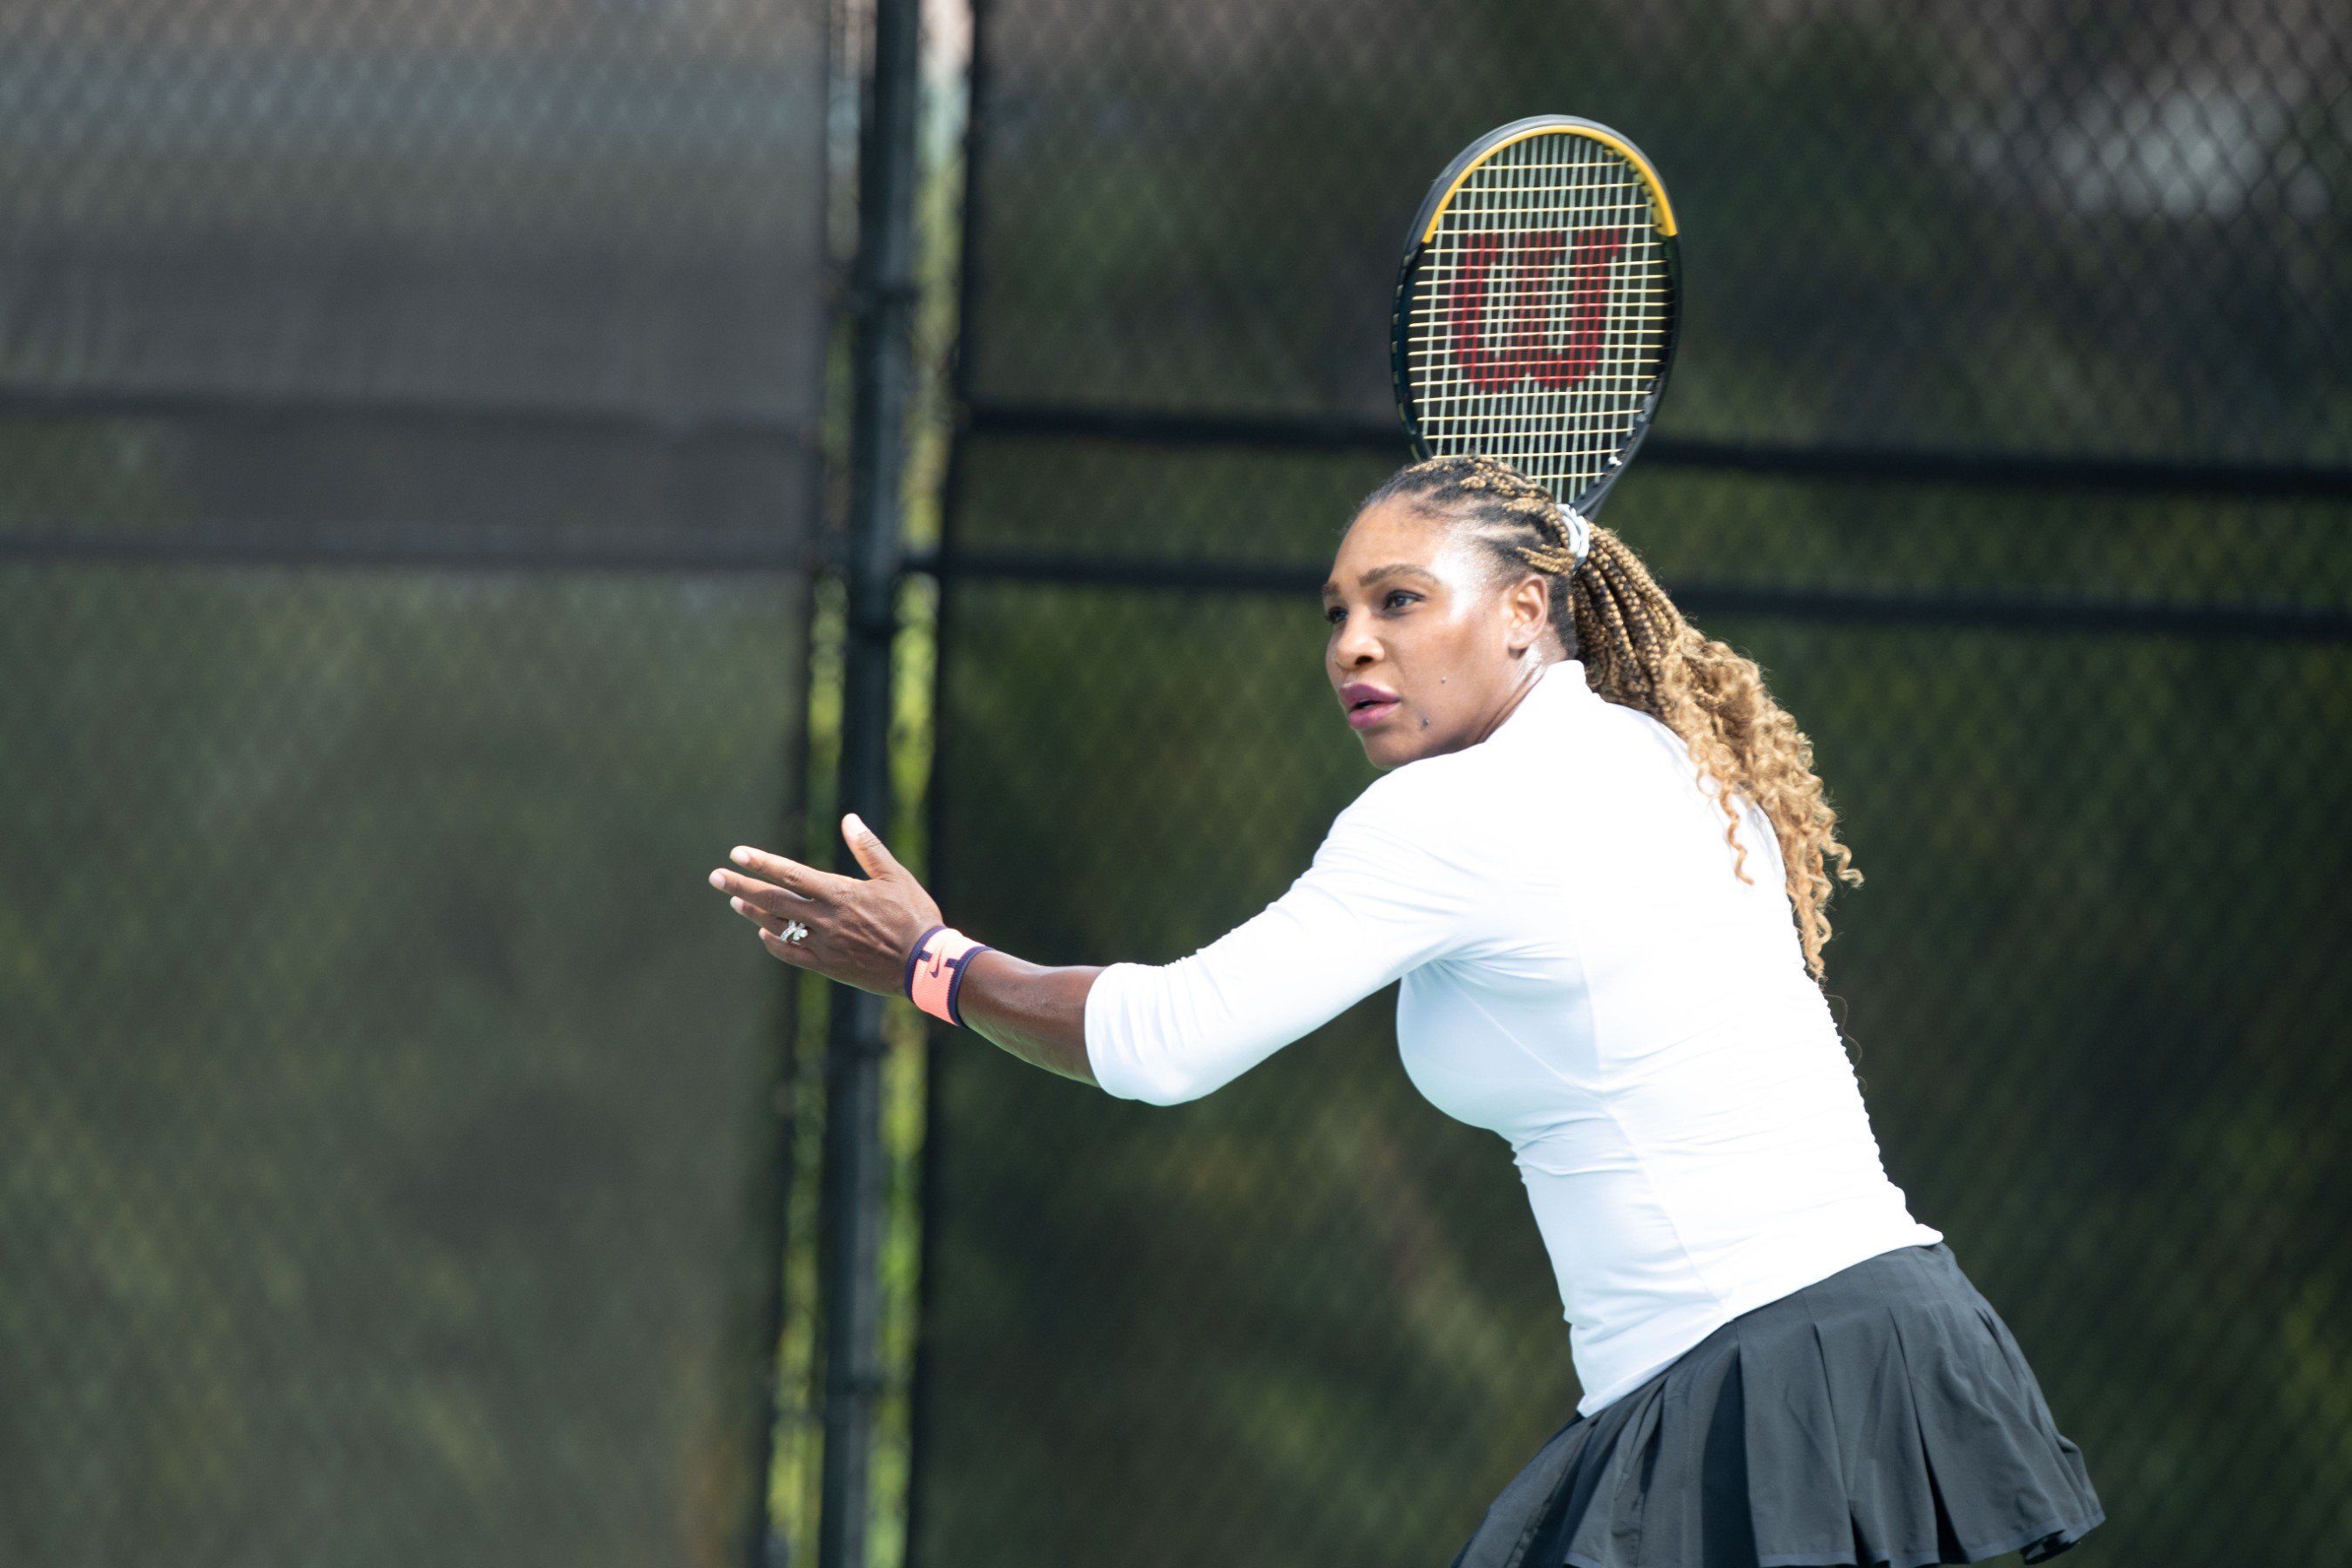 Serena Williams for AbbVie Ubrelvy migraine med campaign